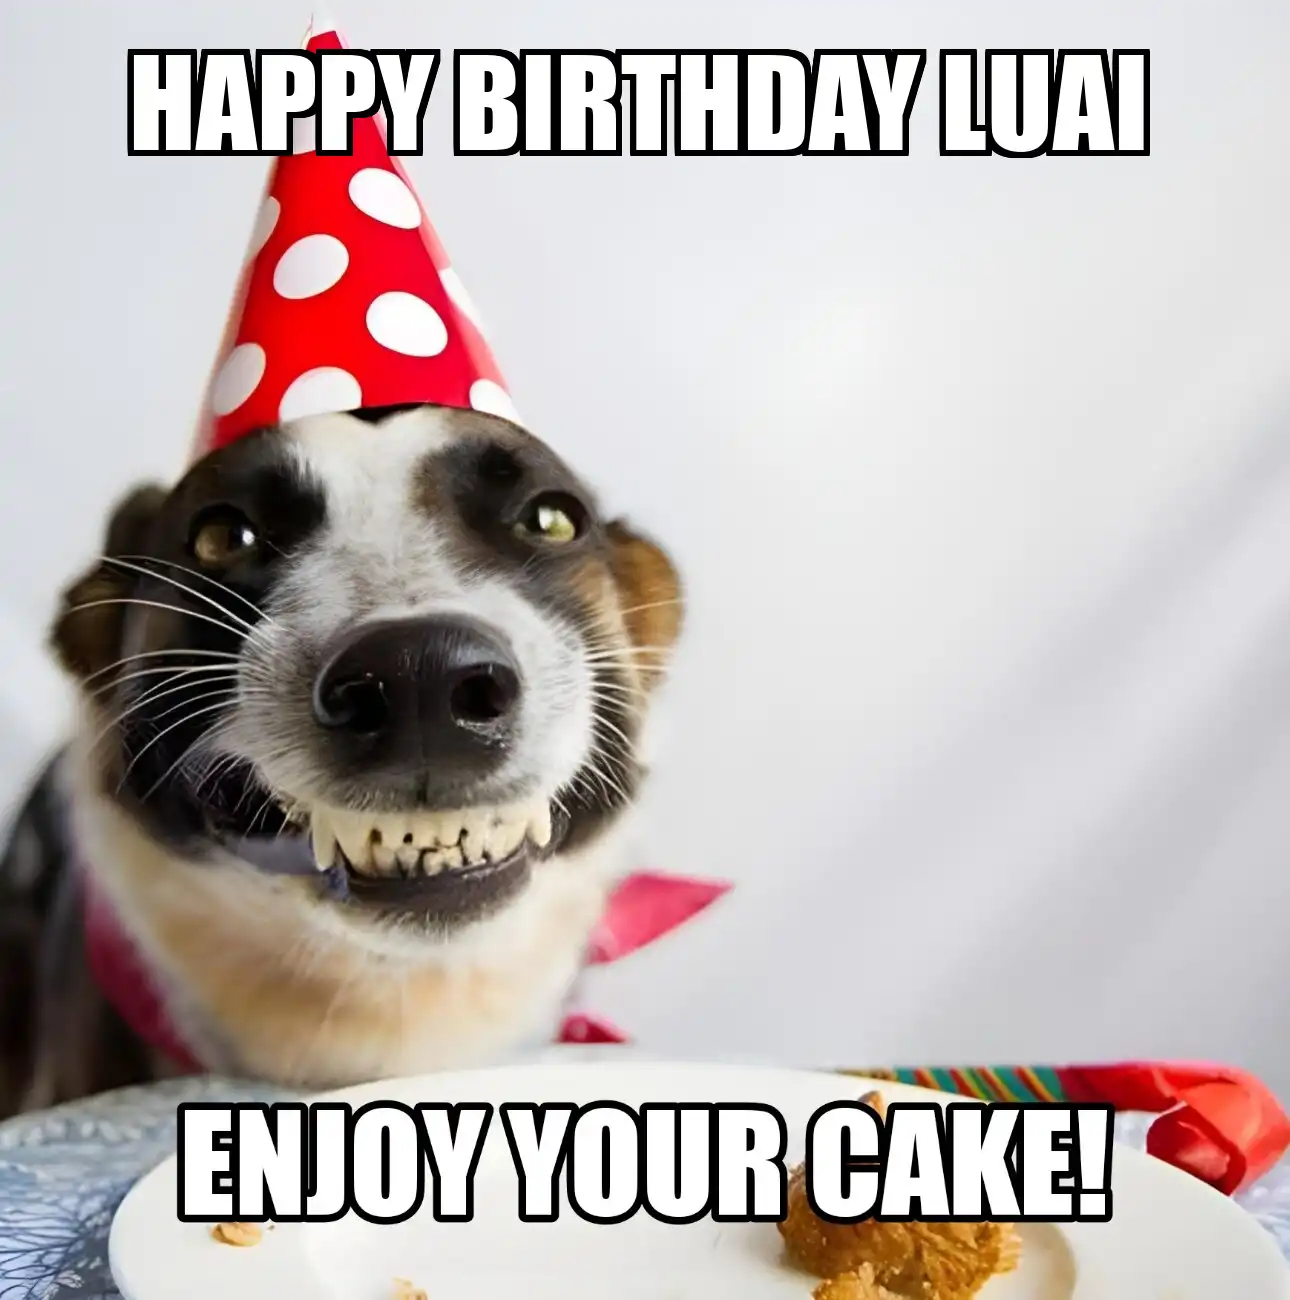 Happy Birthday Luai Enjoy Your Cake Dog Meme